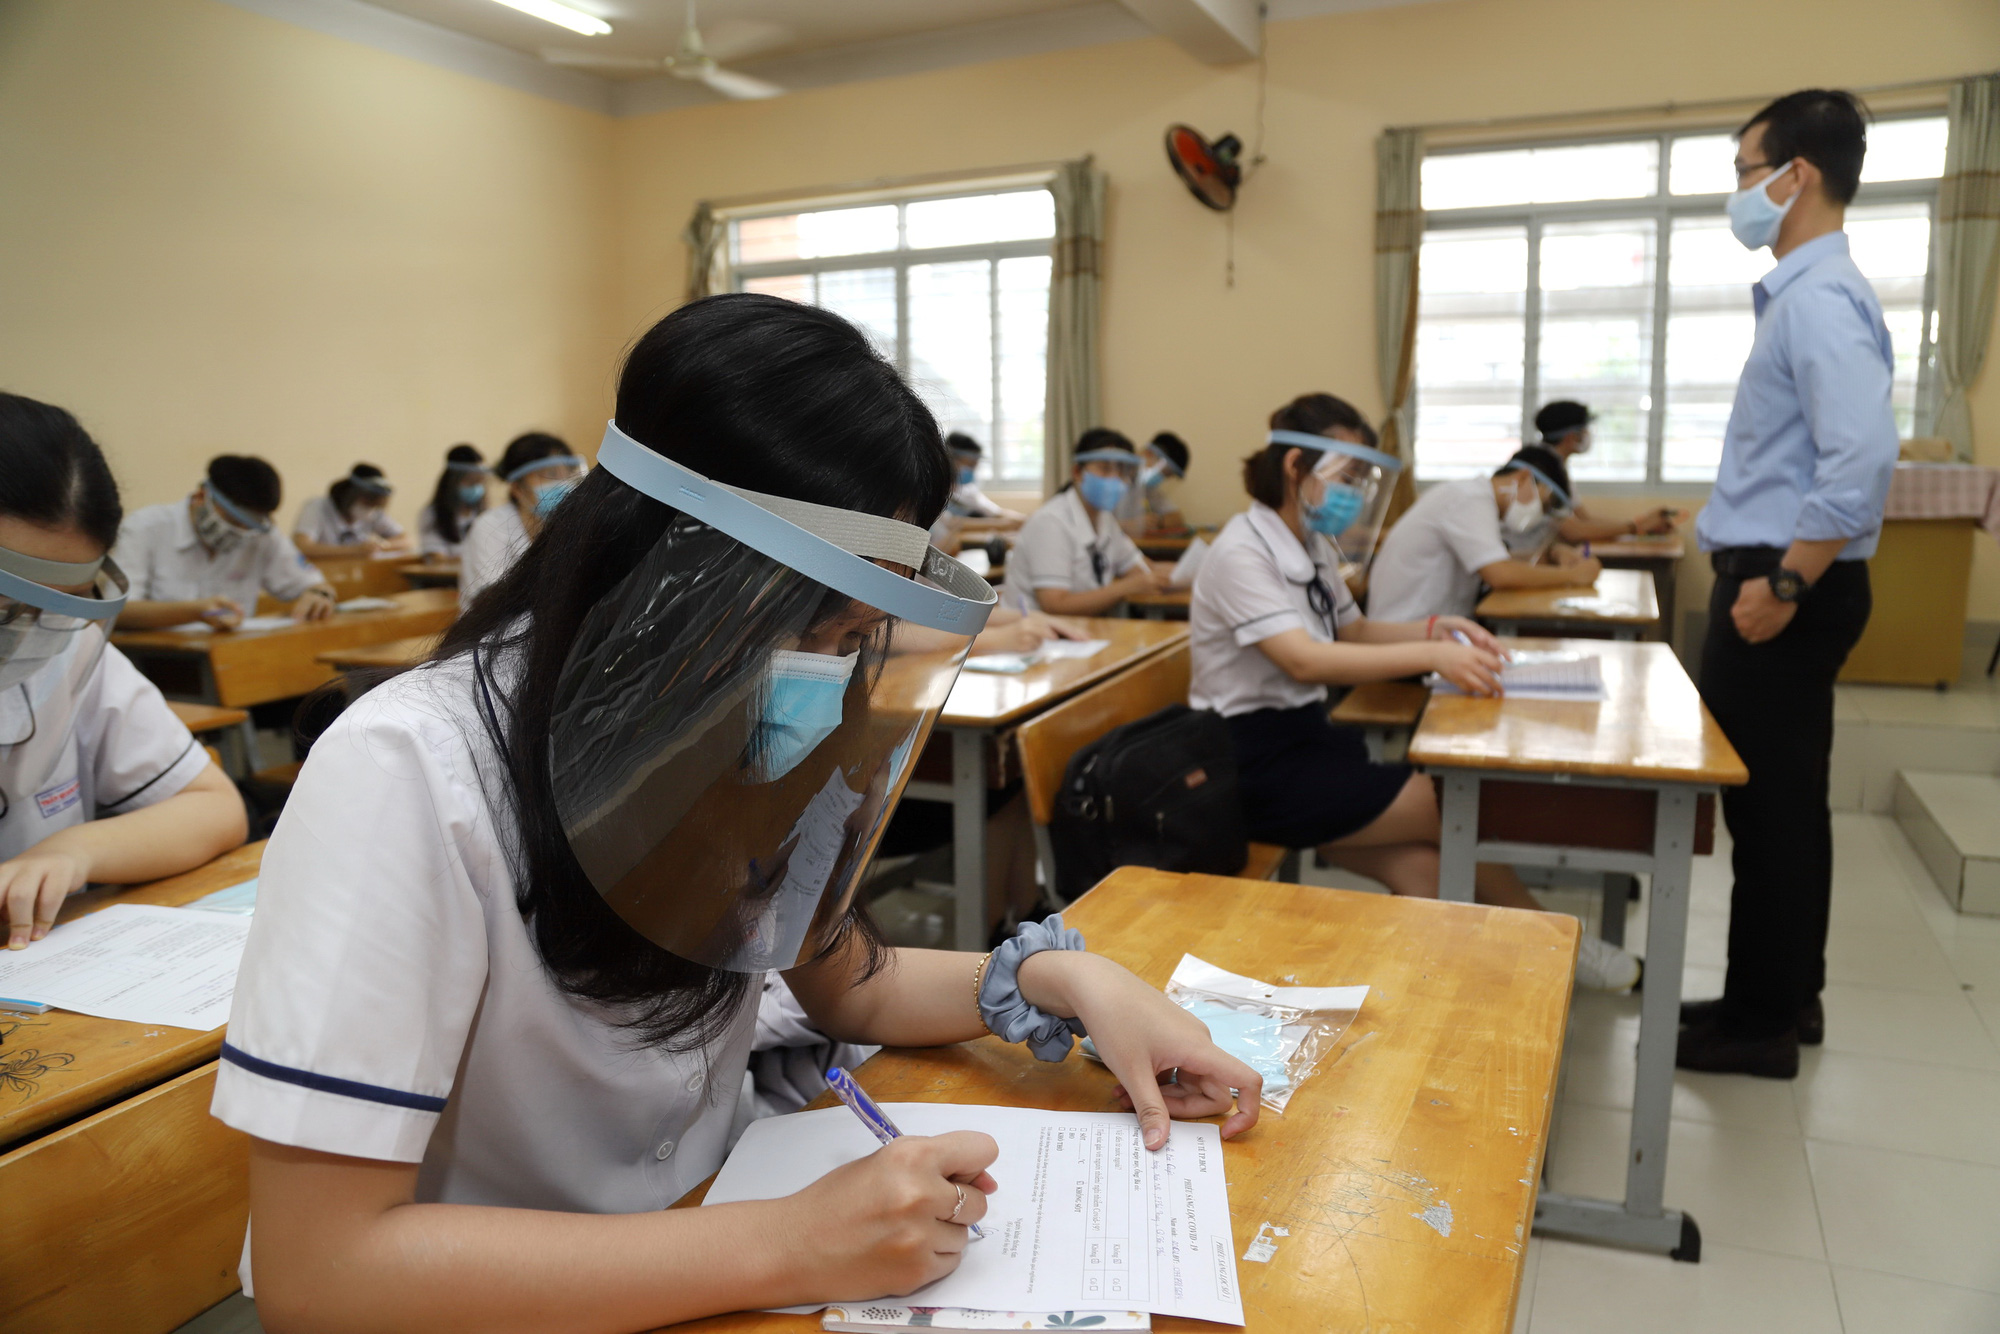 Overkill? Debate in Vietnam over necessity of face shields in class